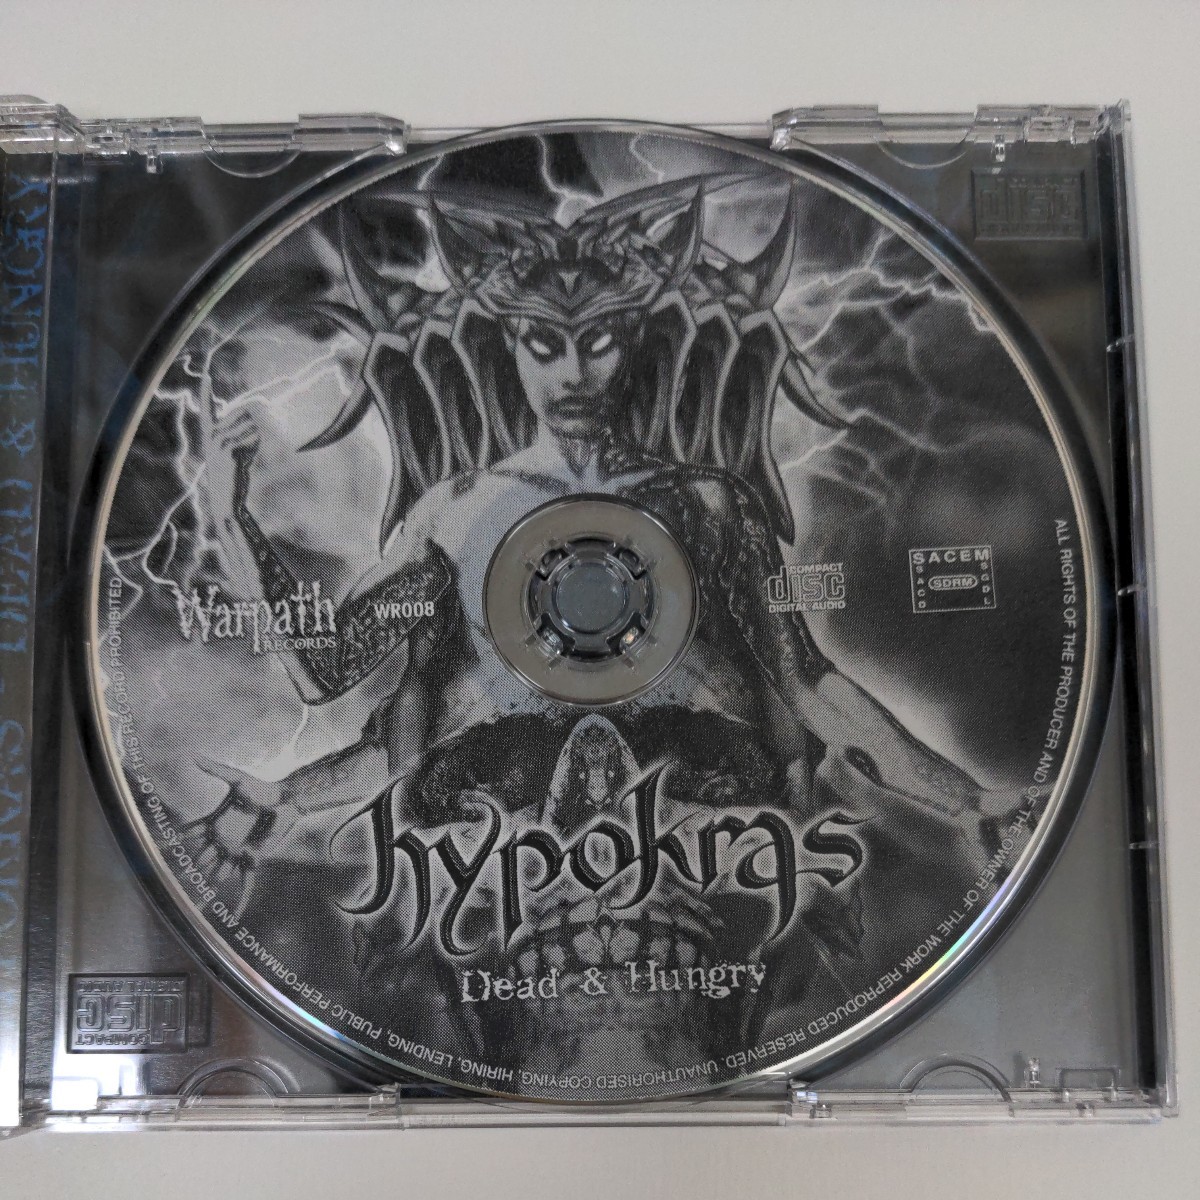 Hypokras　France　Death Thrash Heavy Metal　デス・スラッシュメタル　ヘヴィメタル　輸入盤CD　唯一作_画像5